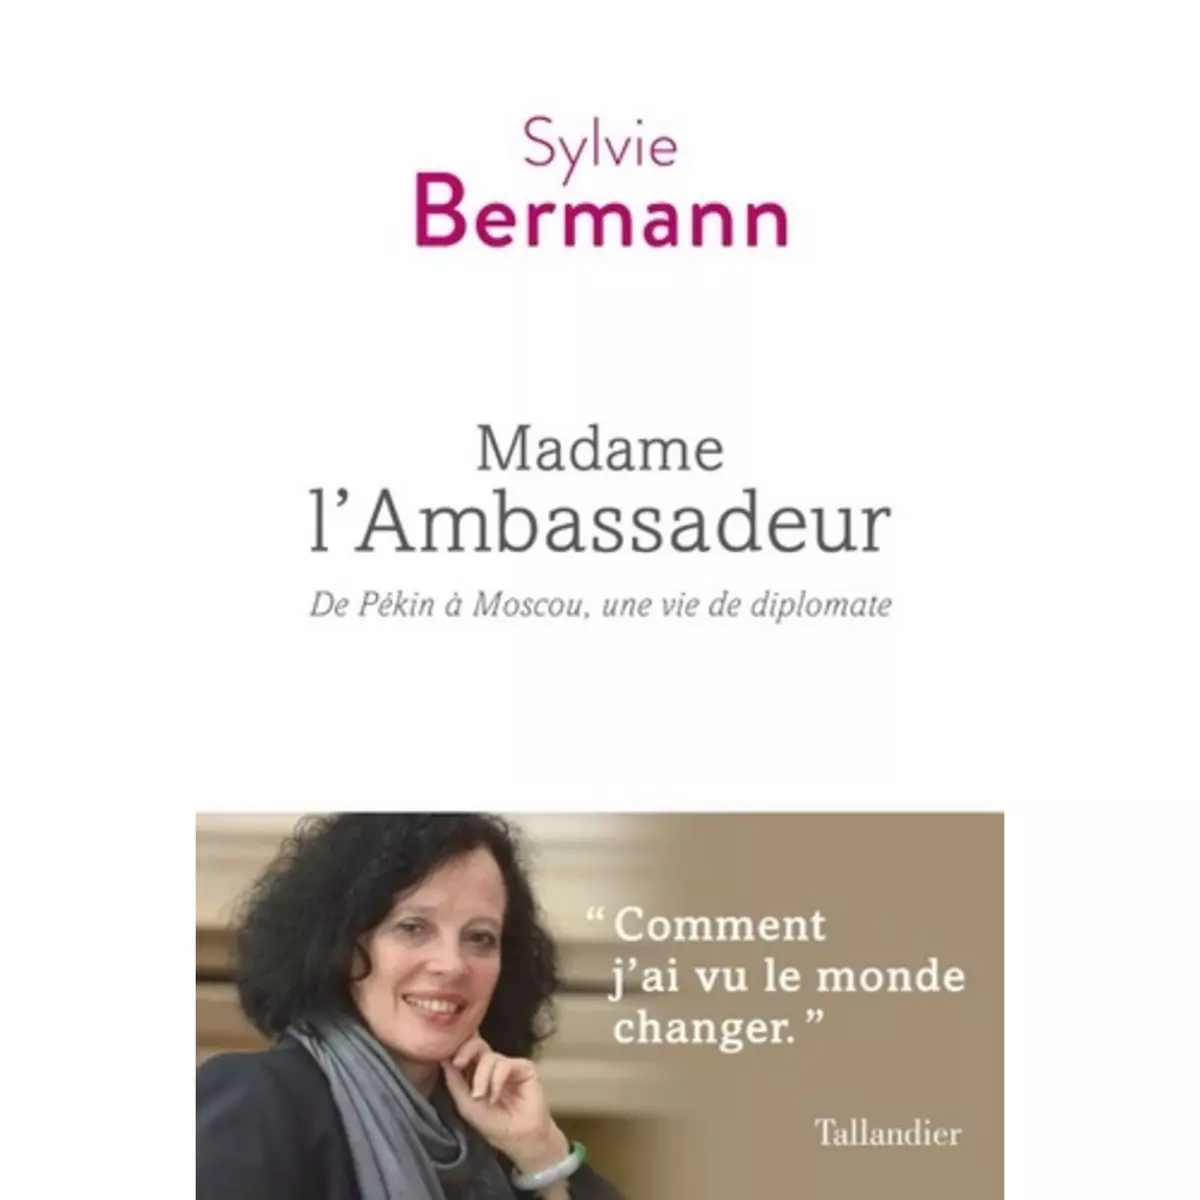  MADAME L'AMBASSADEUR. DE PEKIN A MOSCOU, UNE VIE DE DIPLOMATE, Bermann Sylvie